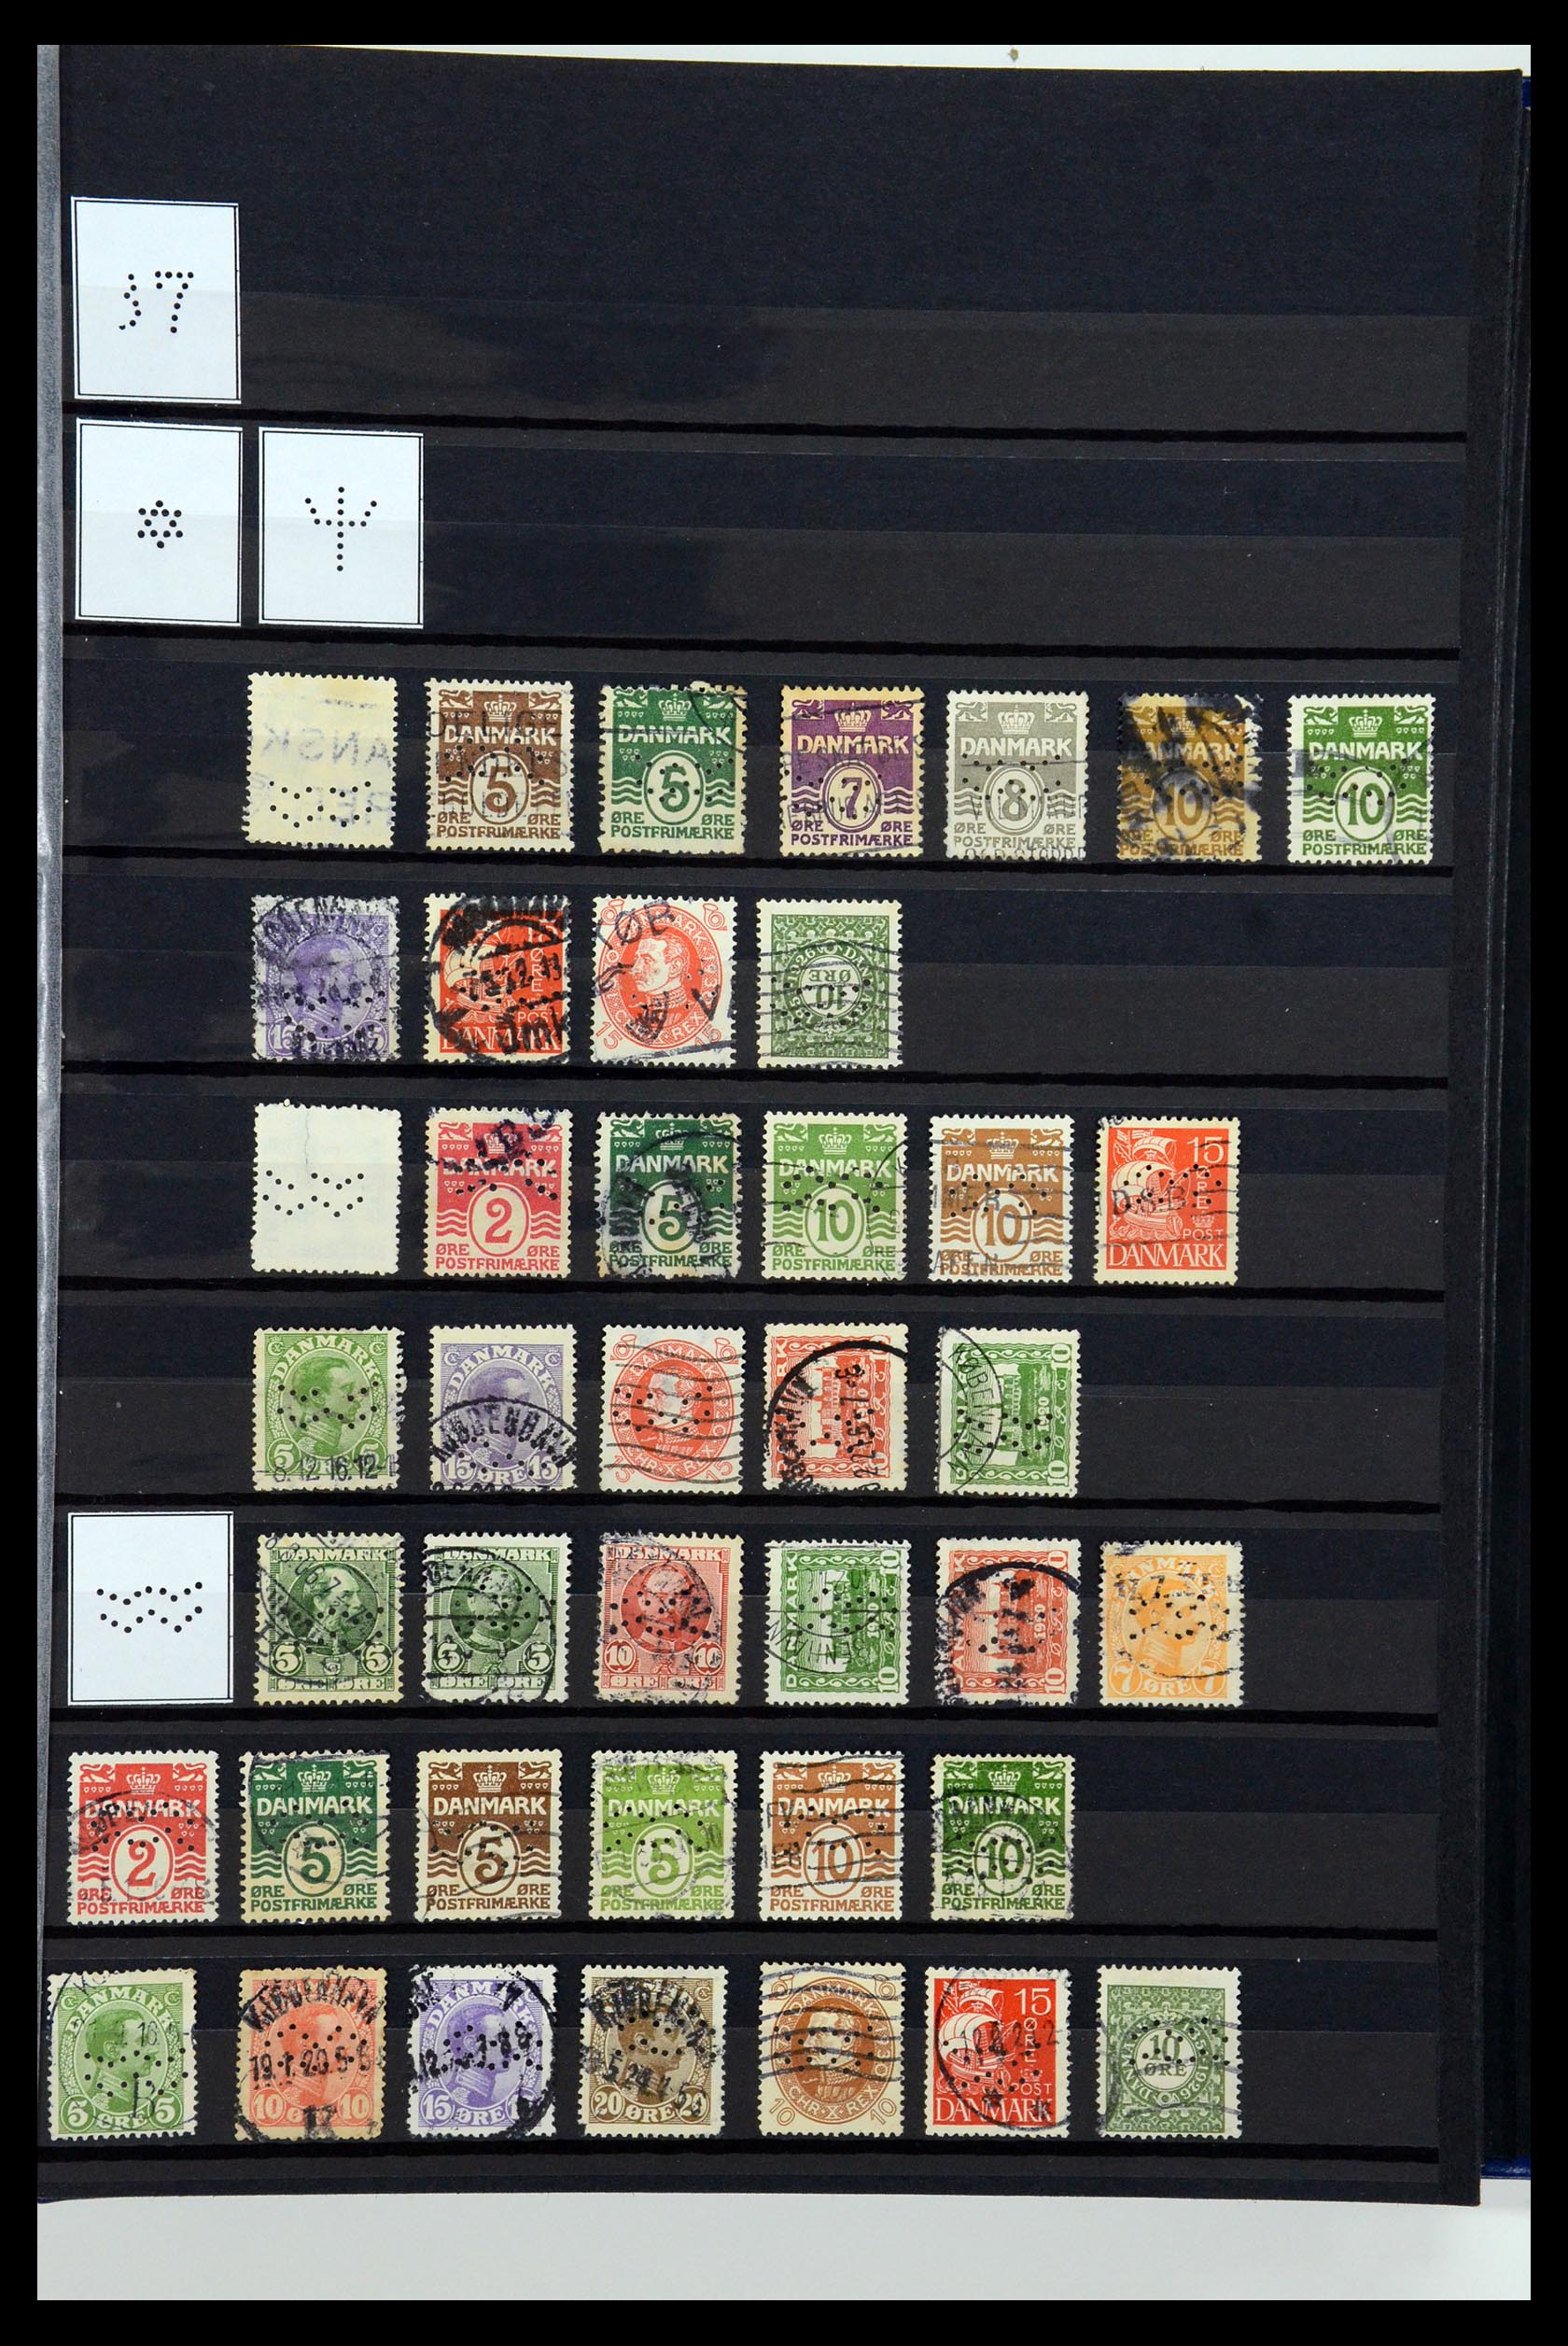 36396 229 - Stamp collection 36396 Denmark perfins.